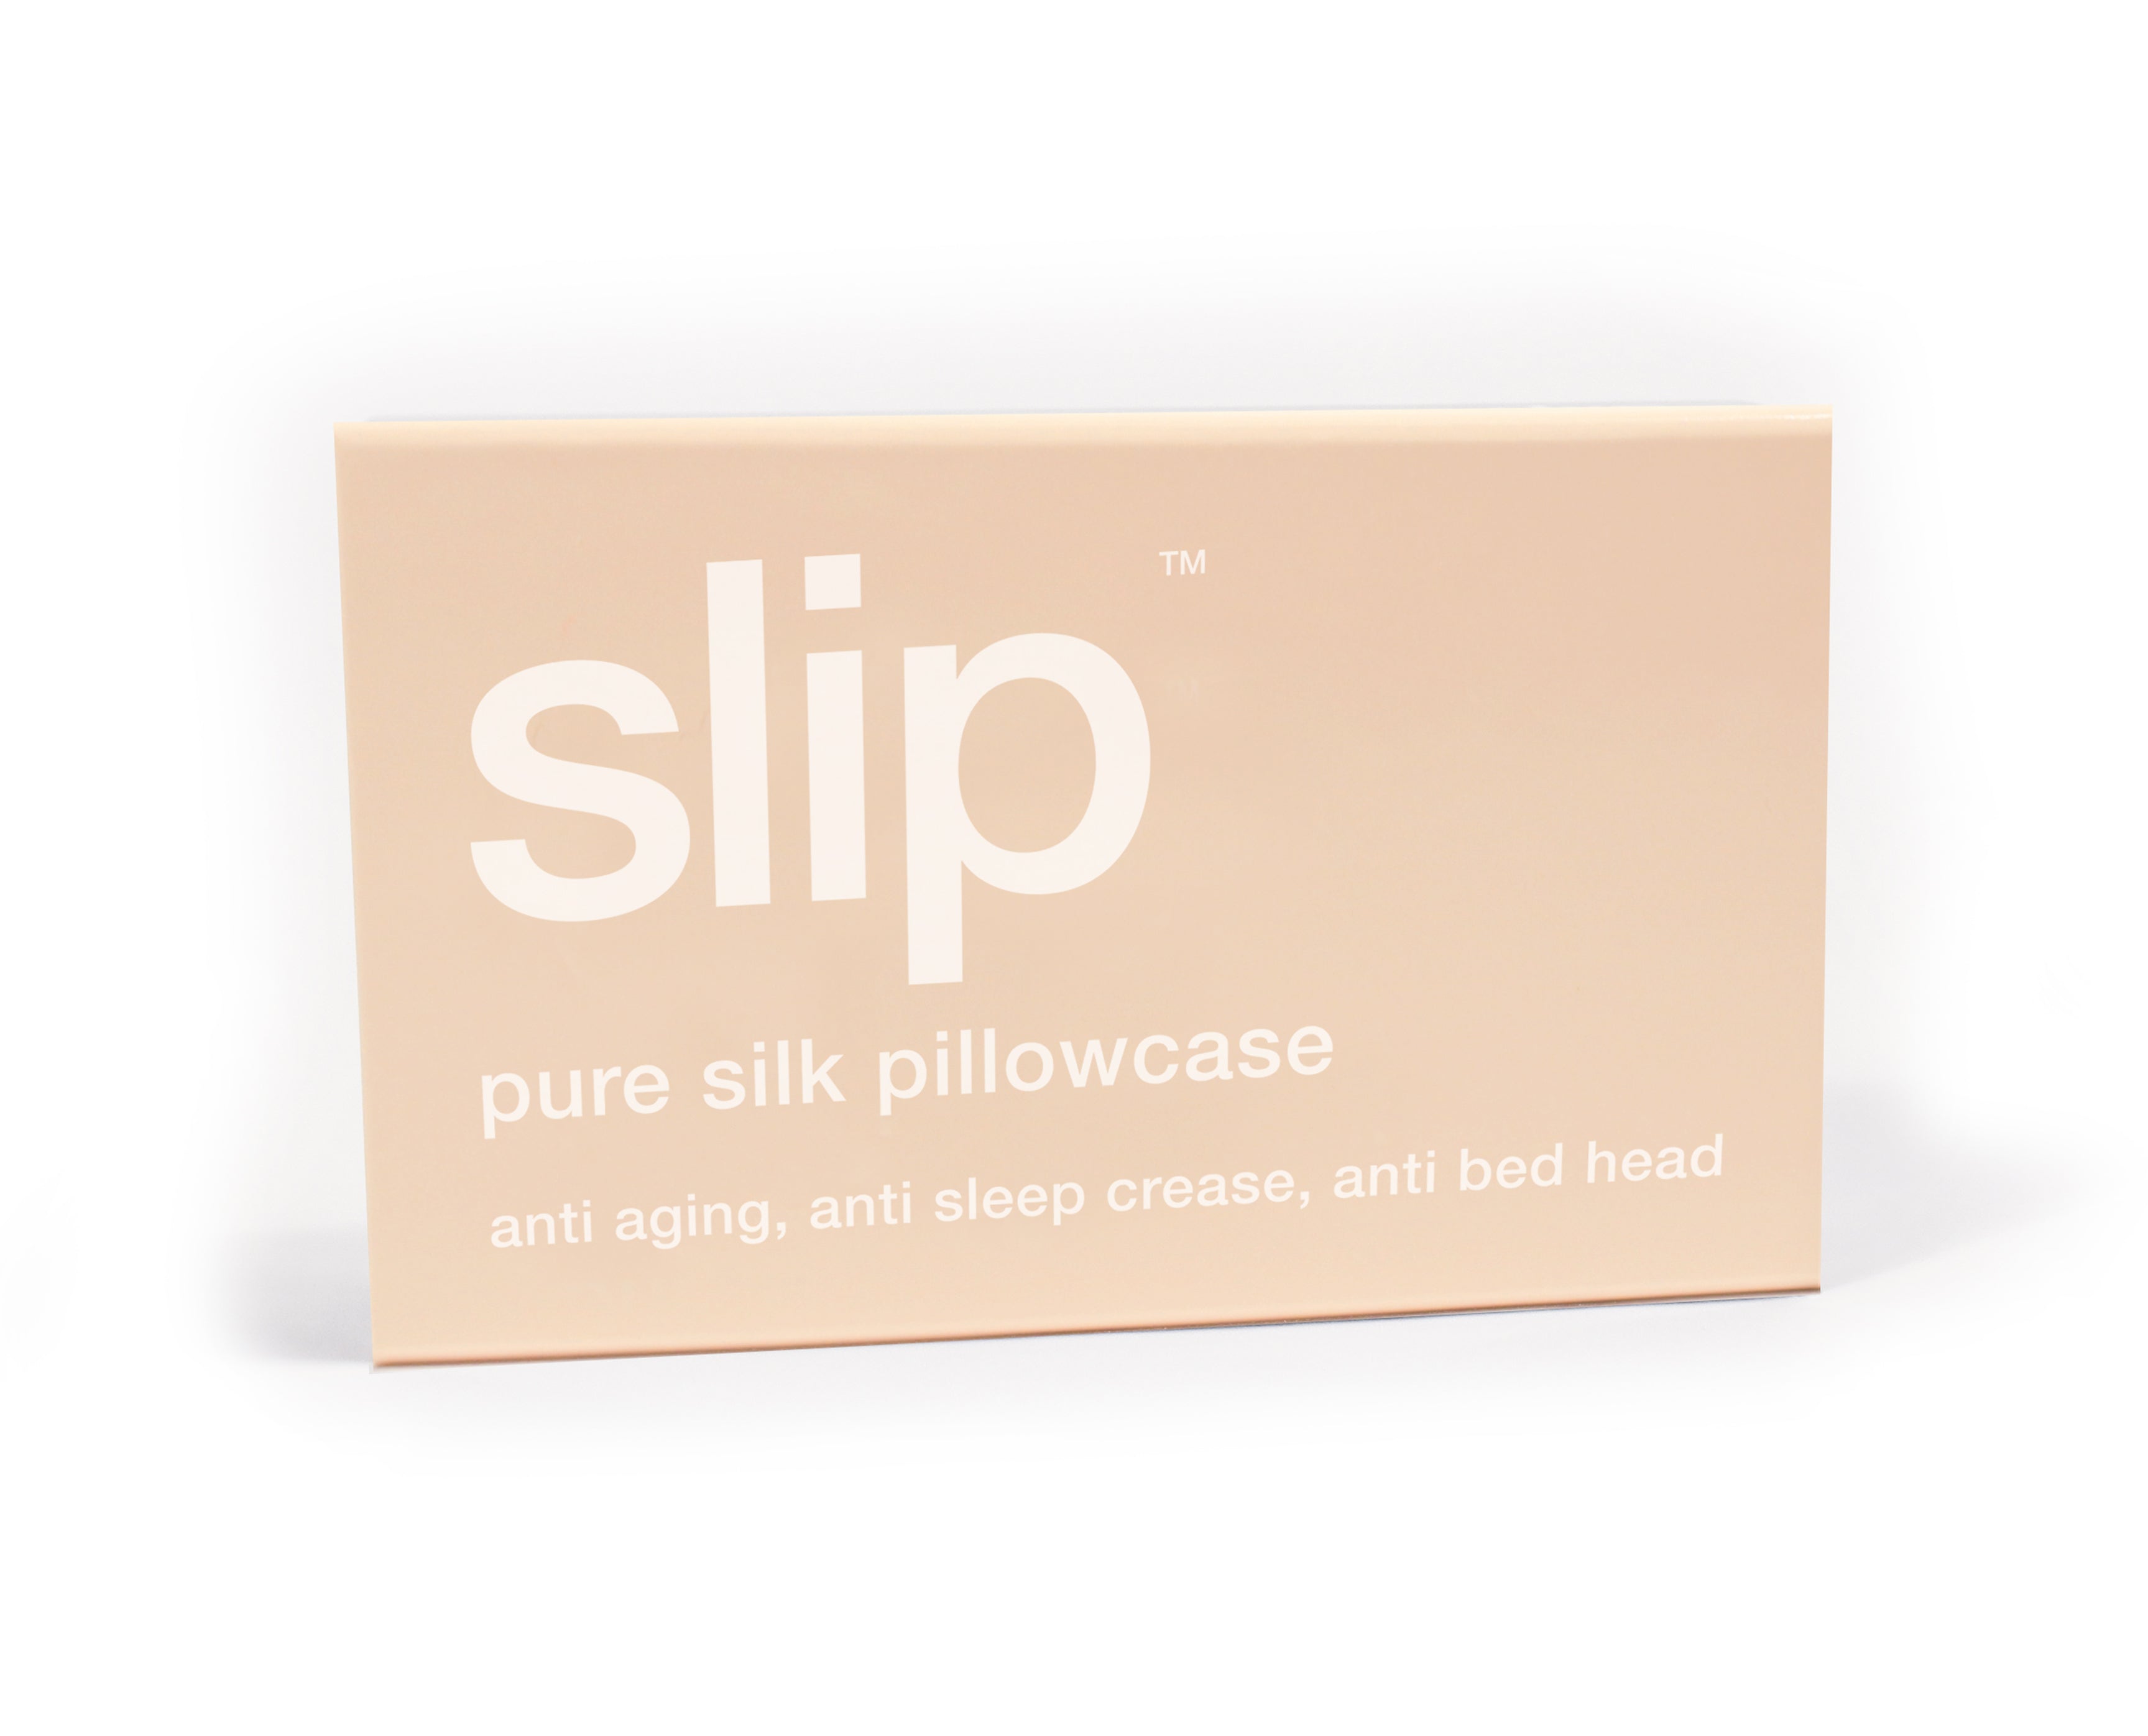 Slip Silk Pillowcase The Original And The Best